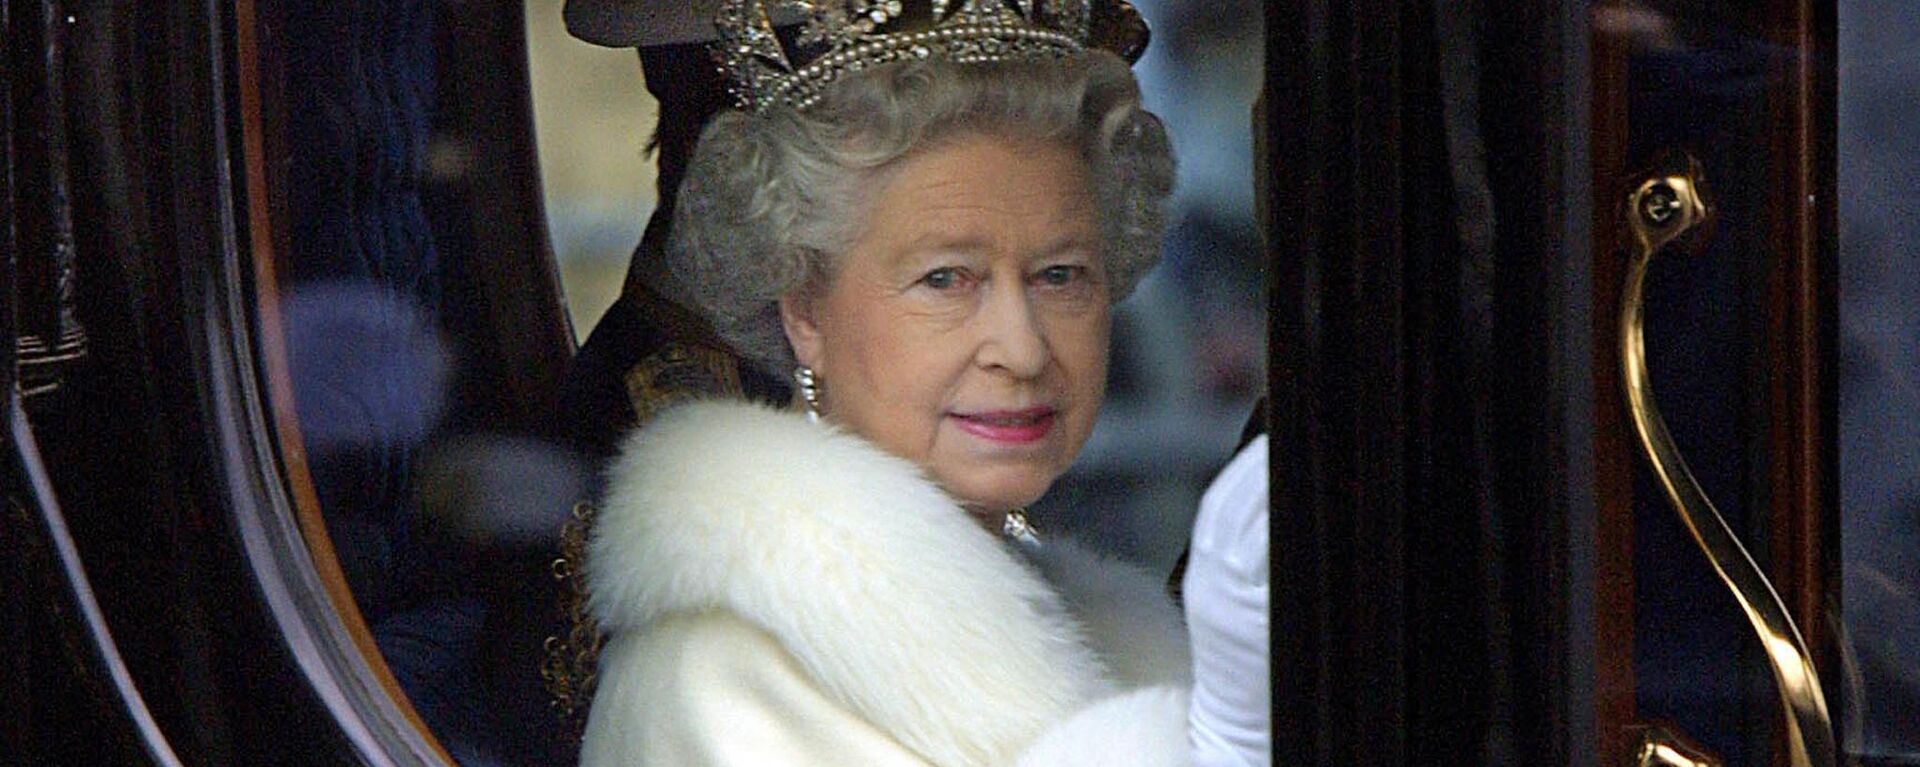 Королева Елизавета II в карете, Лондон, 2000 год - Sputnik Mundo, 1920, 08.09.2022